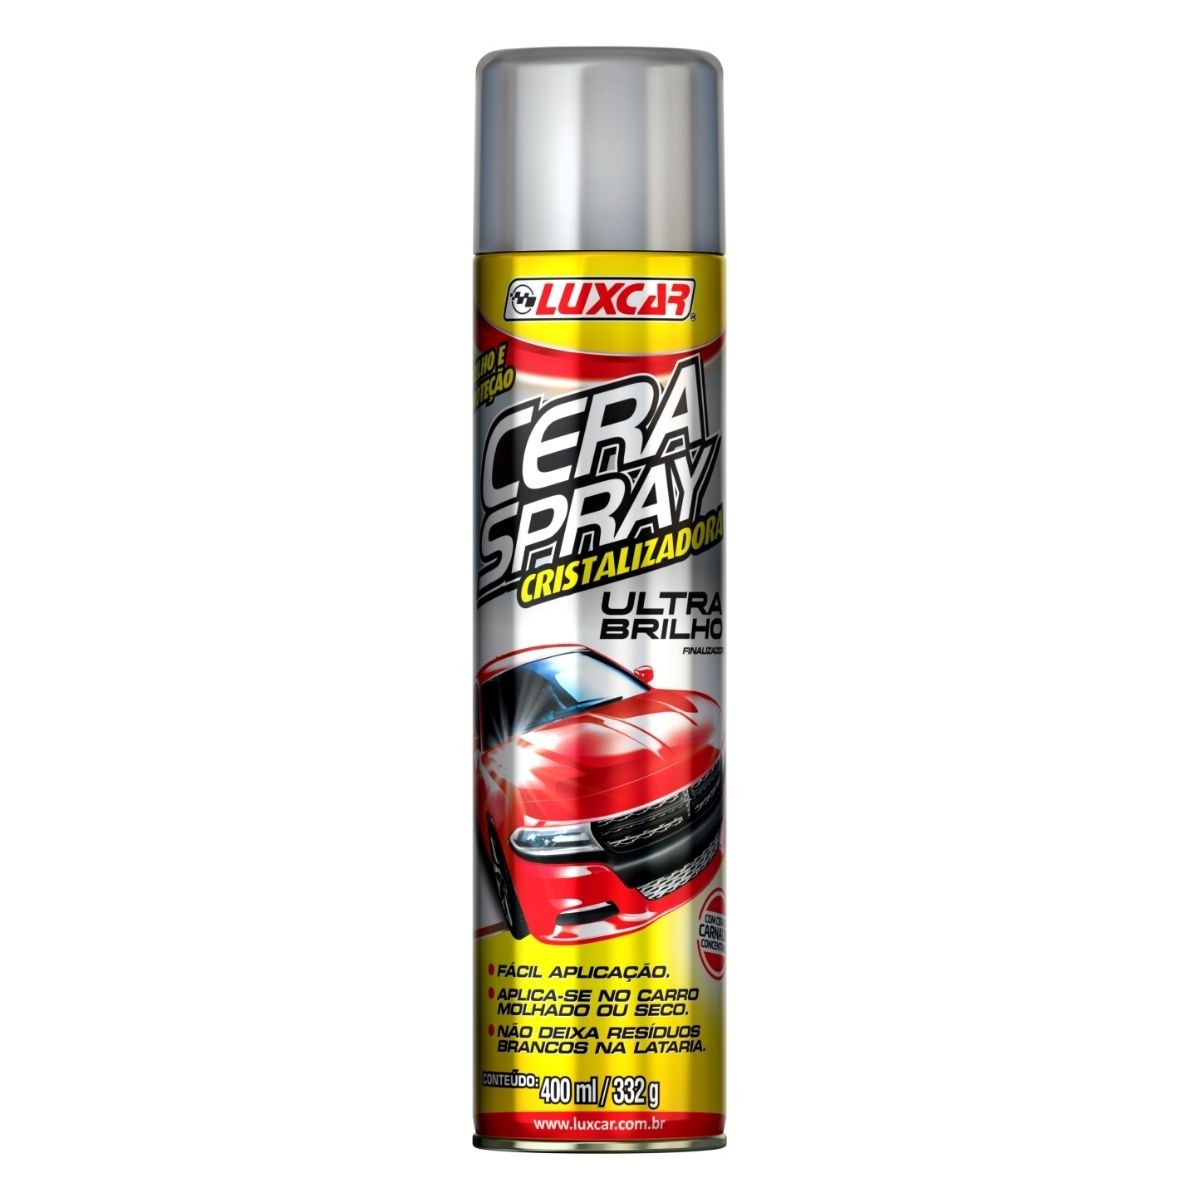 Cera Spray UltraBrilho Cristalizadora Luxcar 400ml